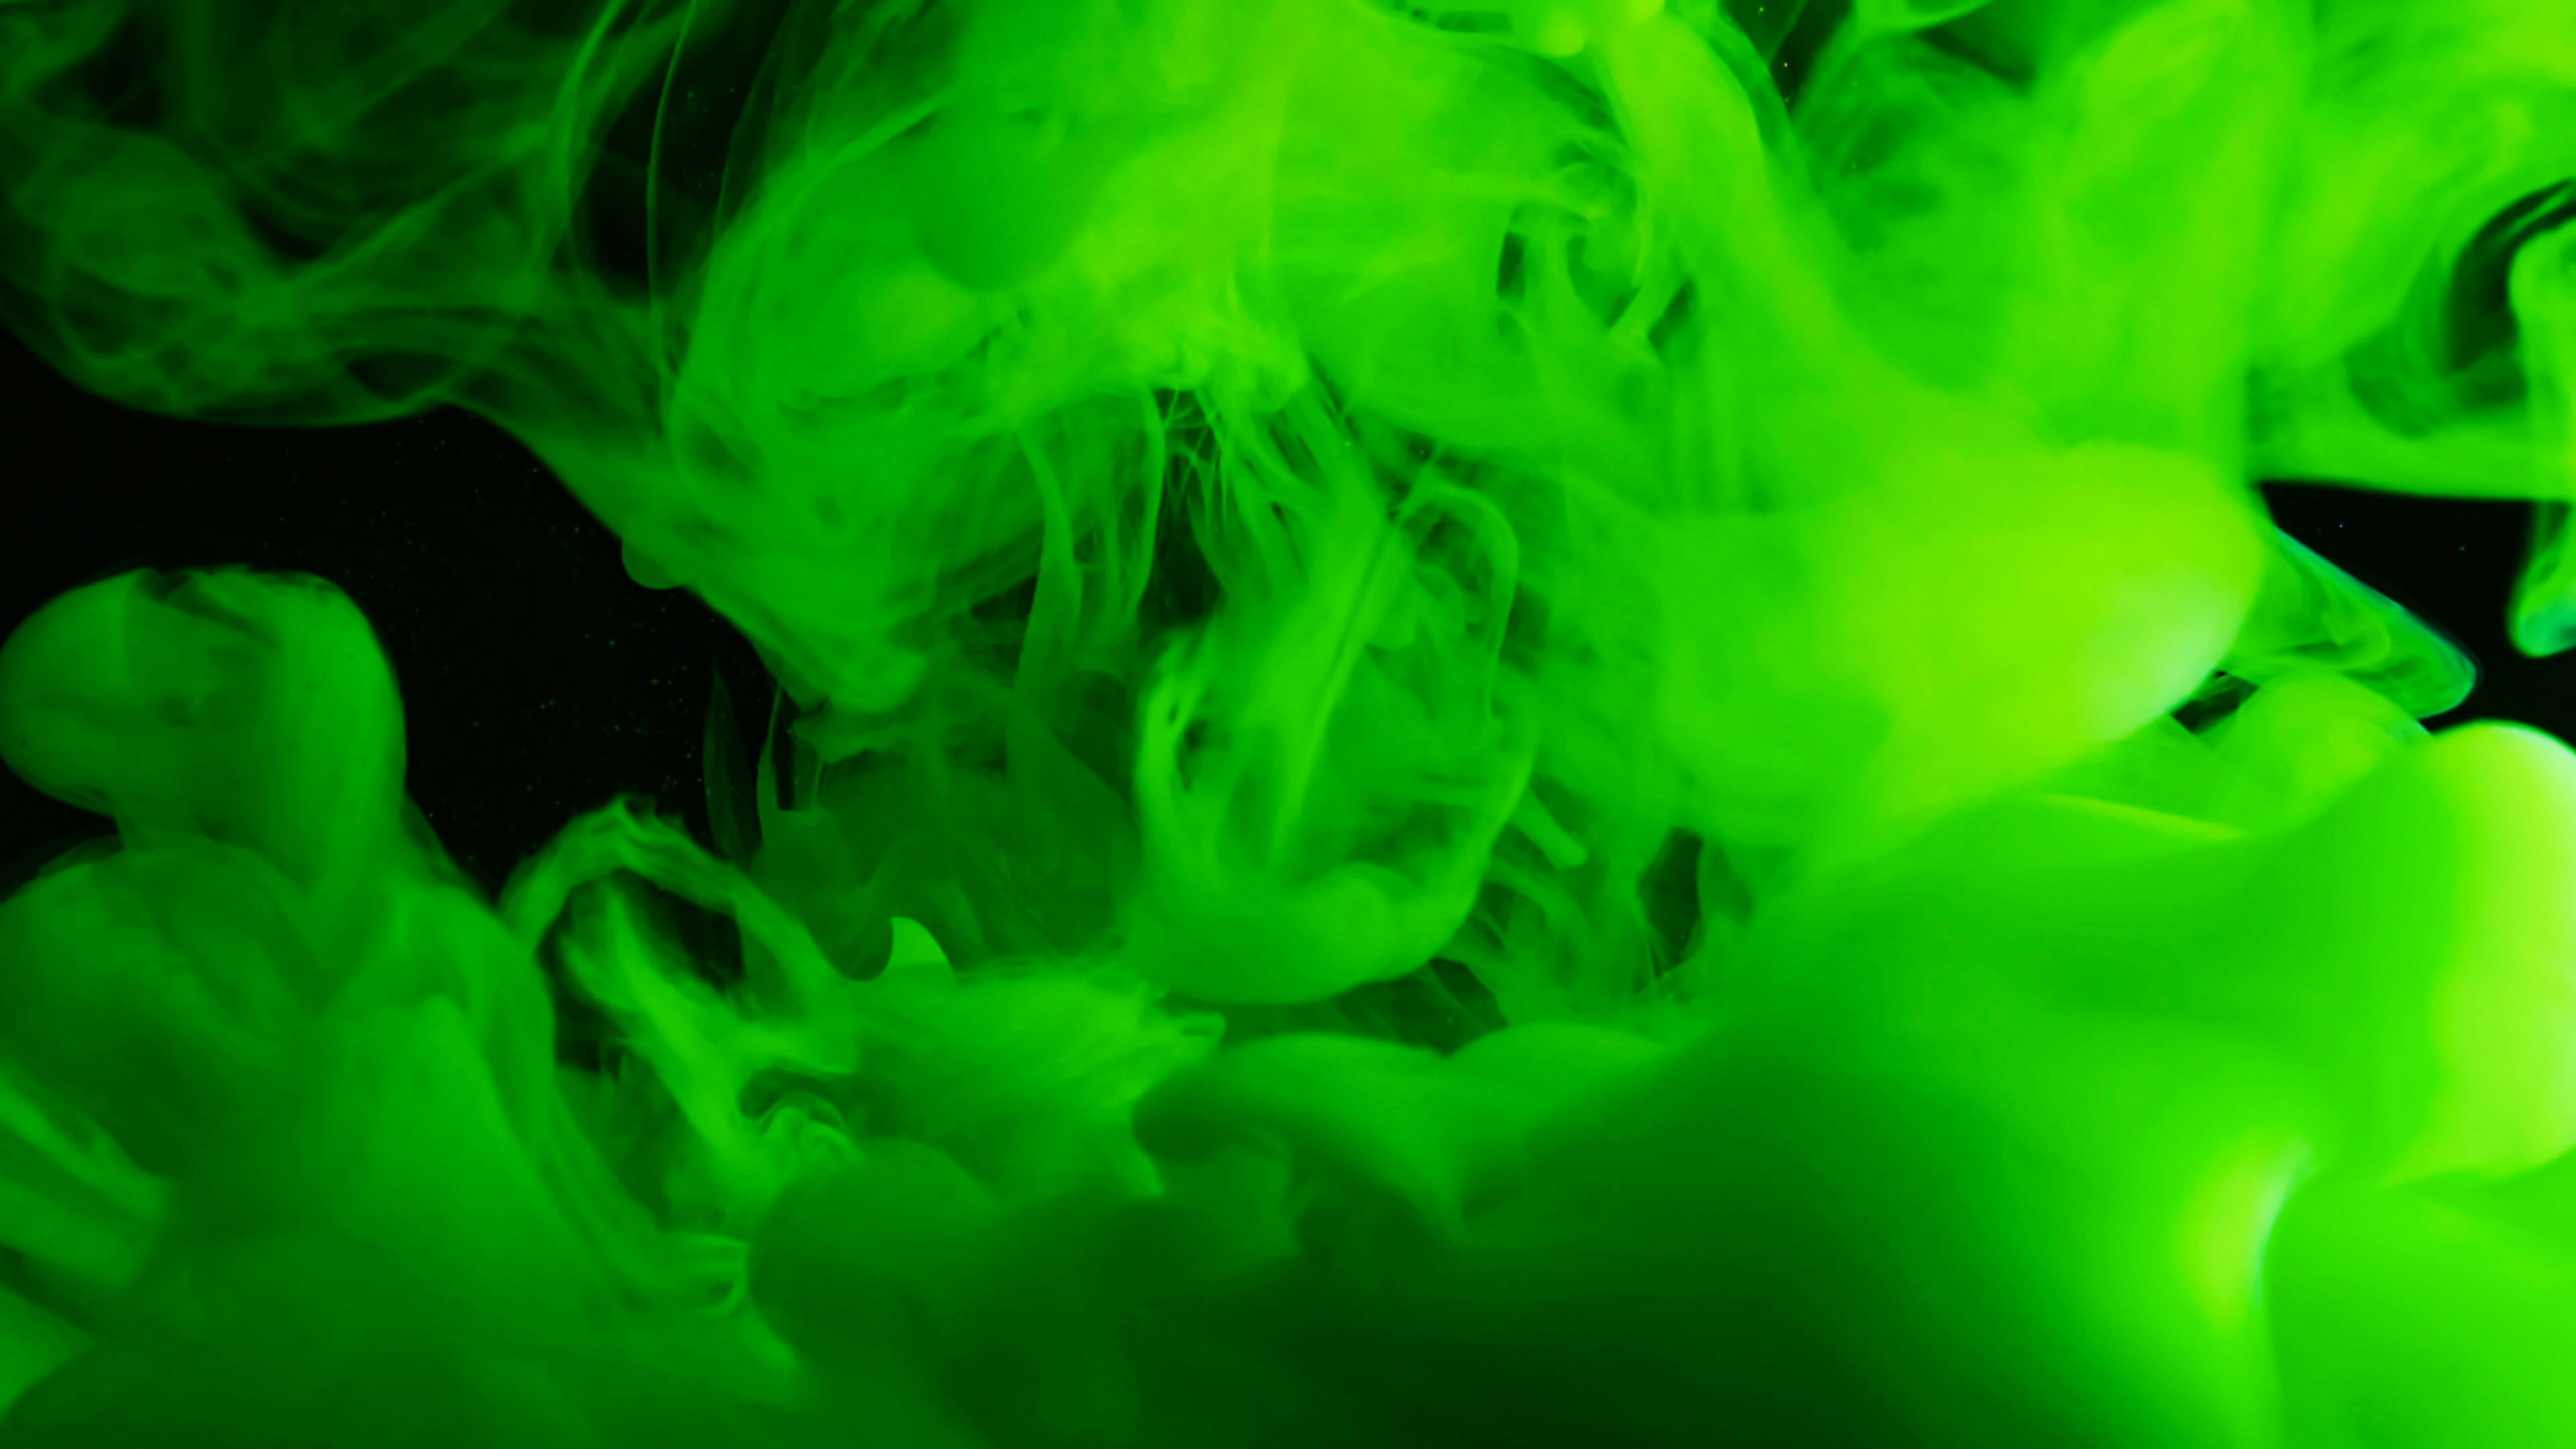 Green Liquid in Water · Free Stock Photo